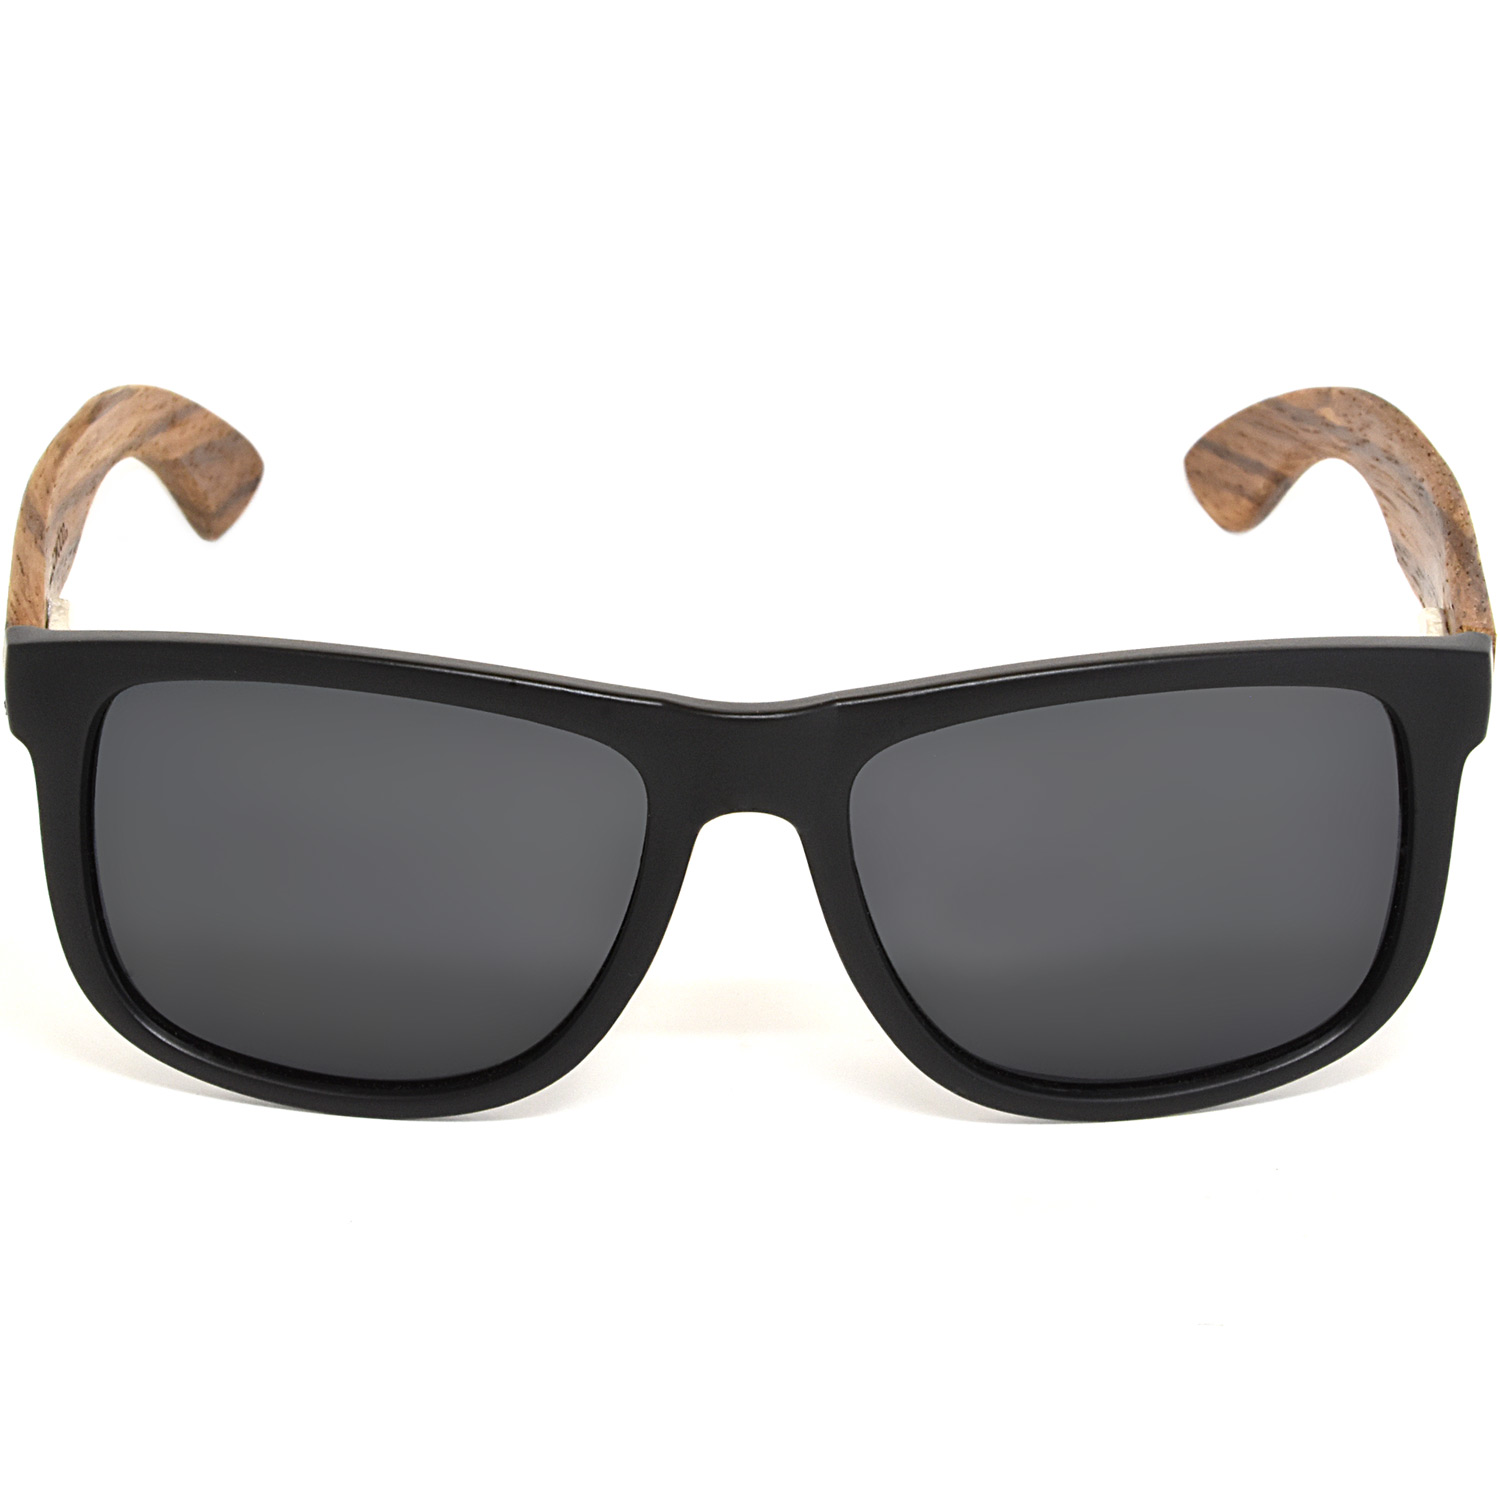 Square zebra wood sunglasses black polarized lenses acetate front